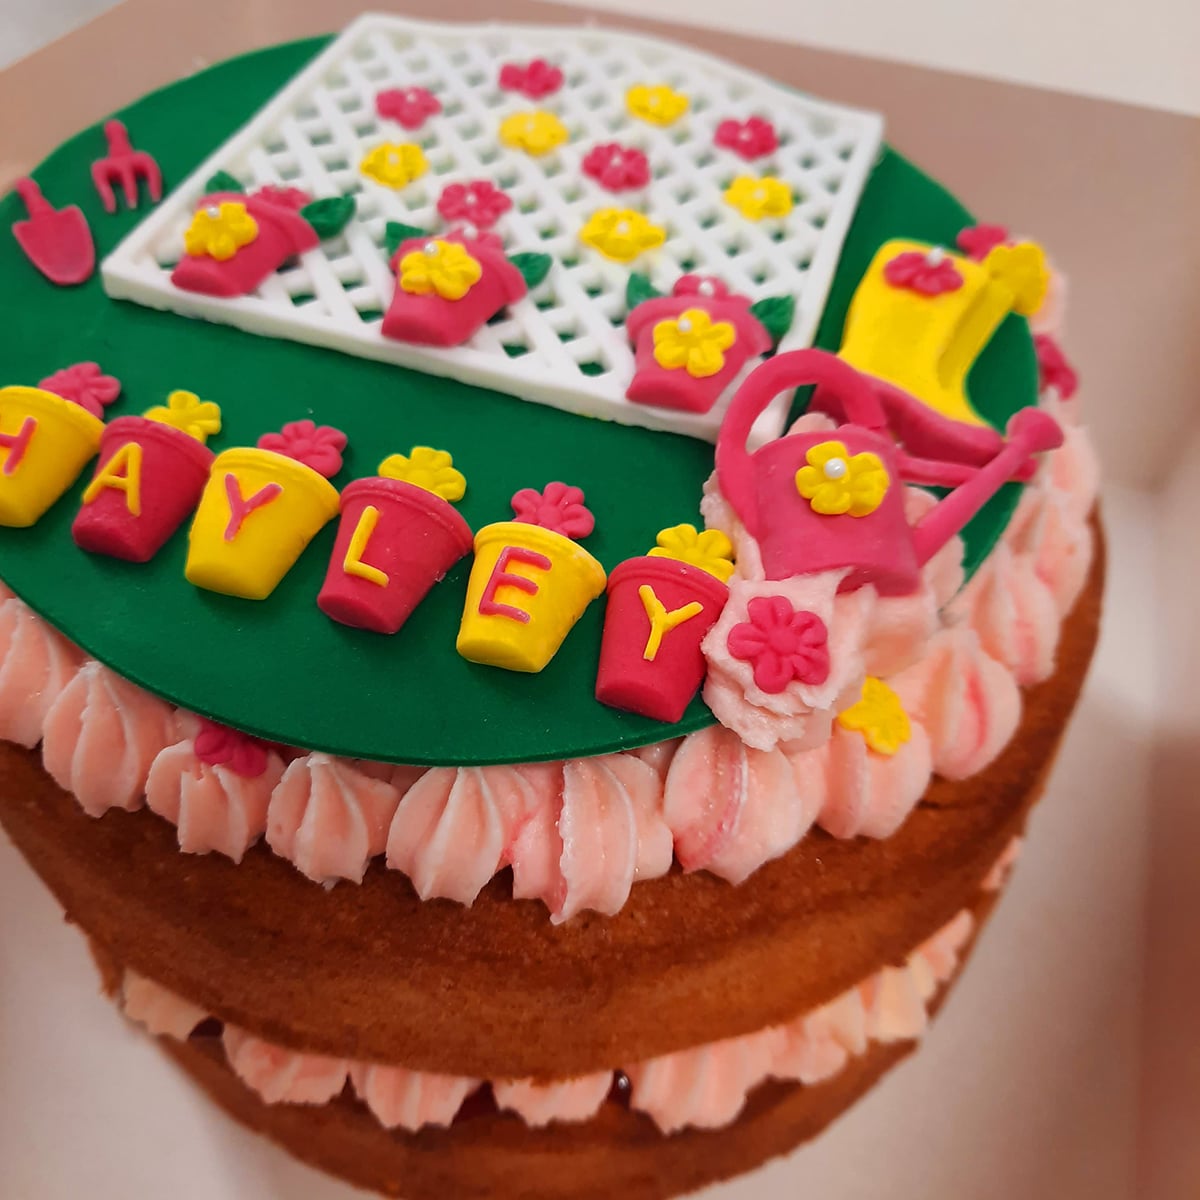 Celebration Cakes - Yorkshire Born & Bread